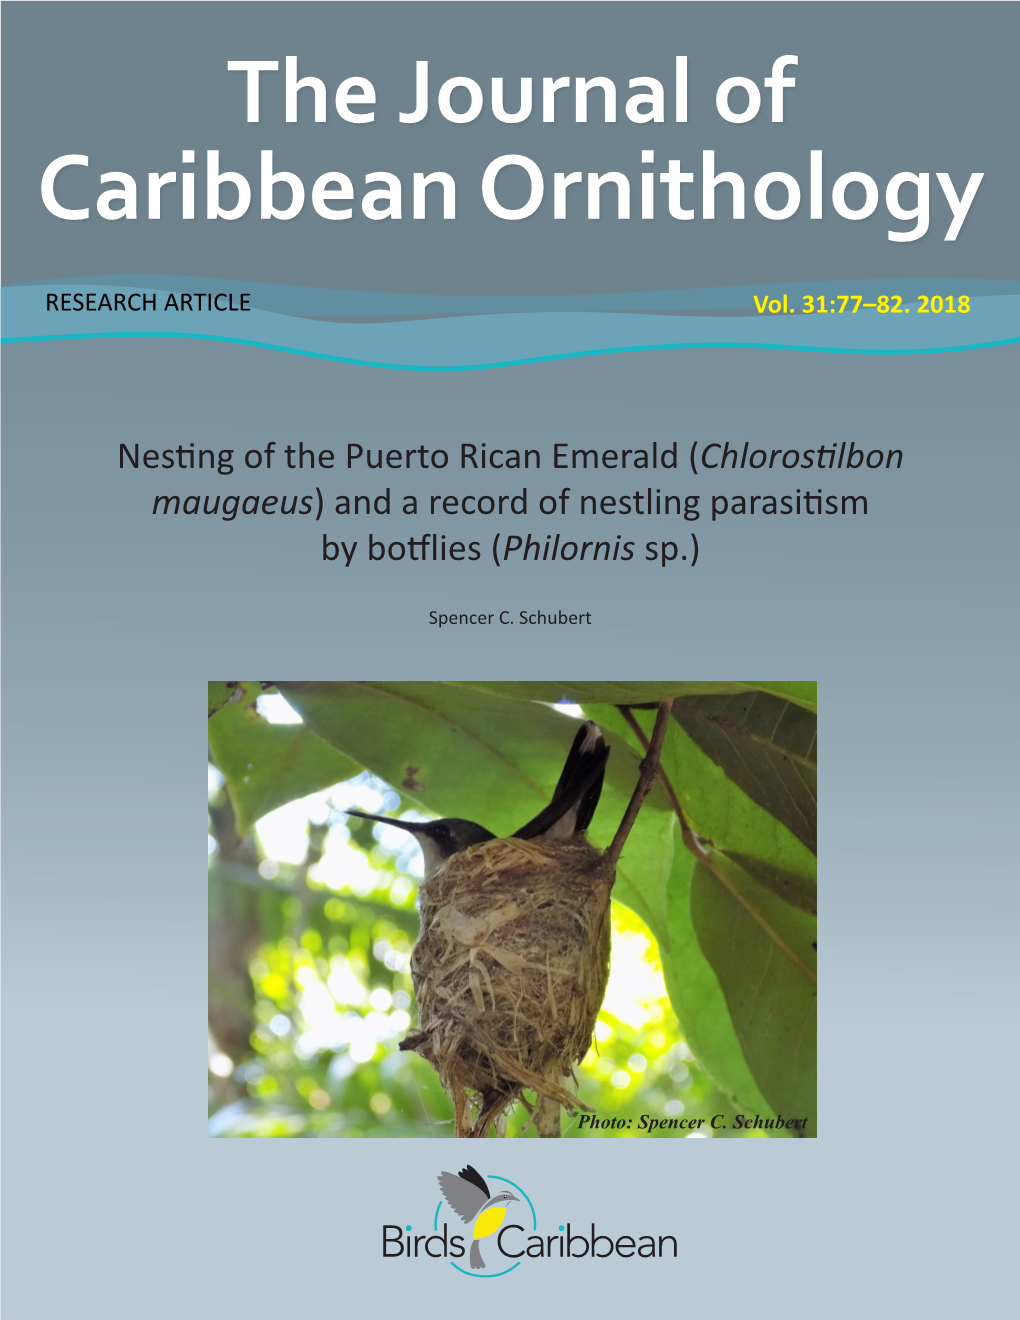 Chlorostilbon Maugaeus) and a Record of Nestling Parasitism by Botflies (Philornis Sp.)